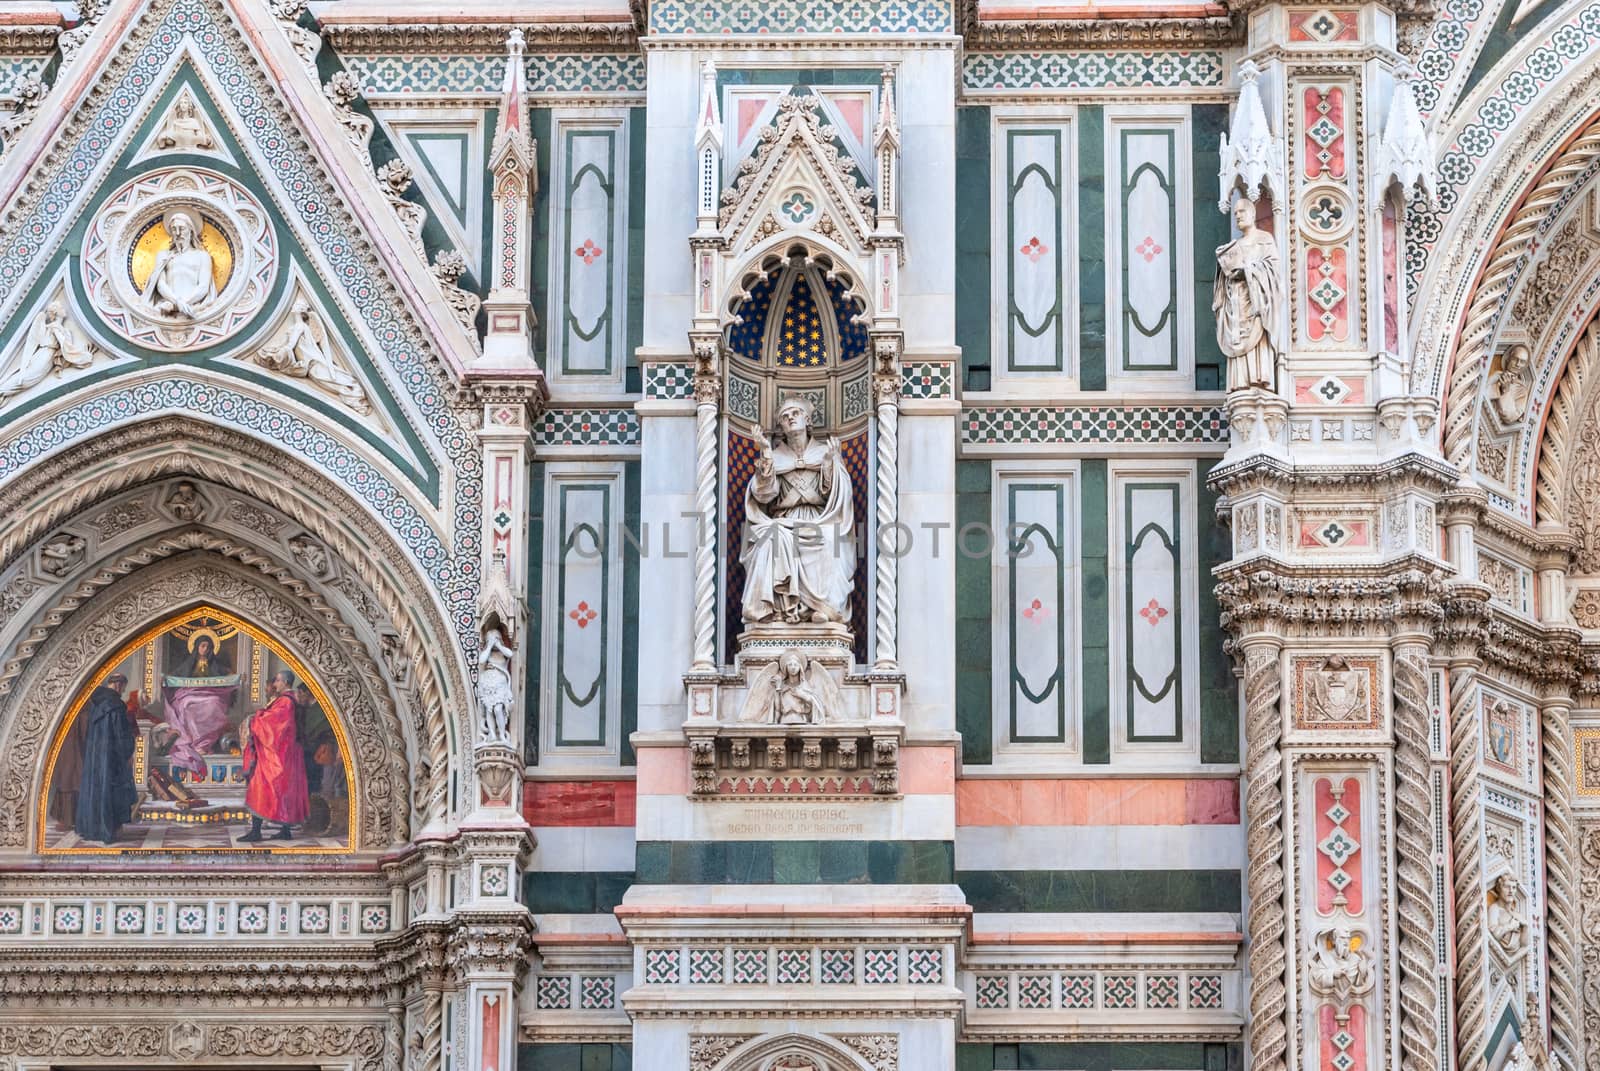 Detail of Cathedral Church Duomo basilica di santa maria del fiore in Florence, Italy